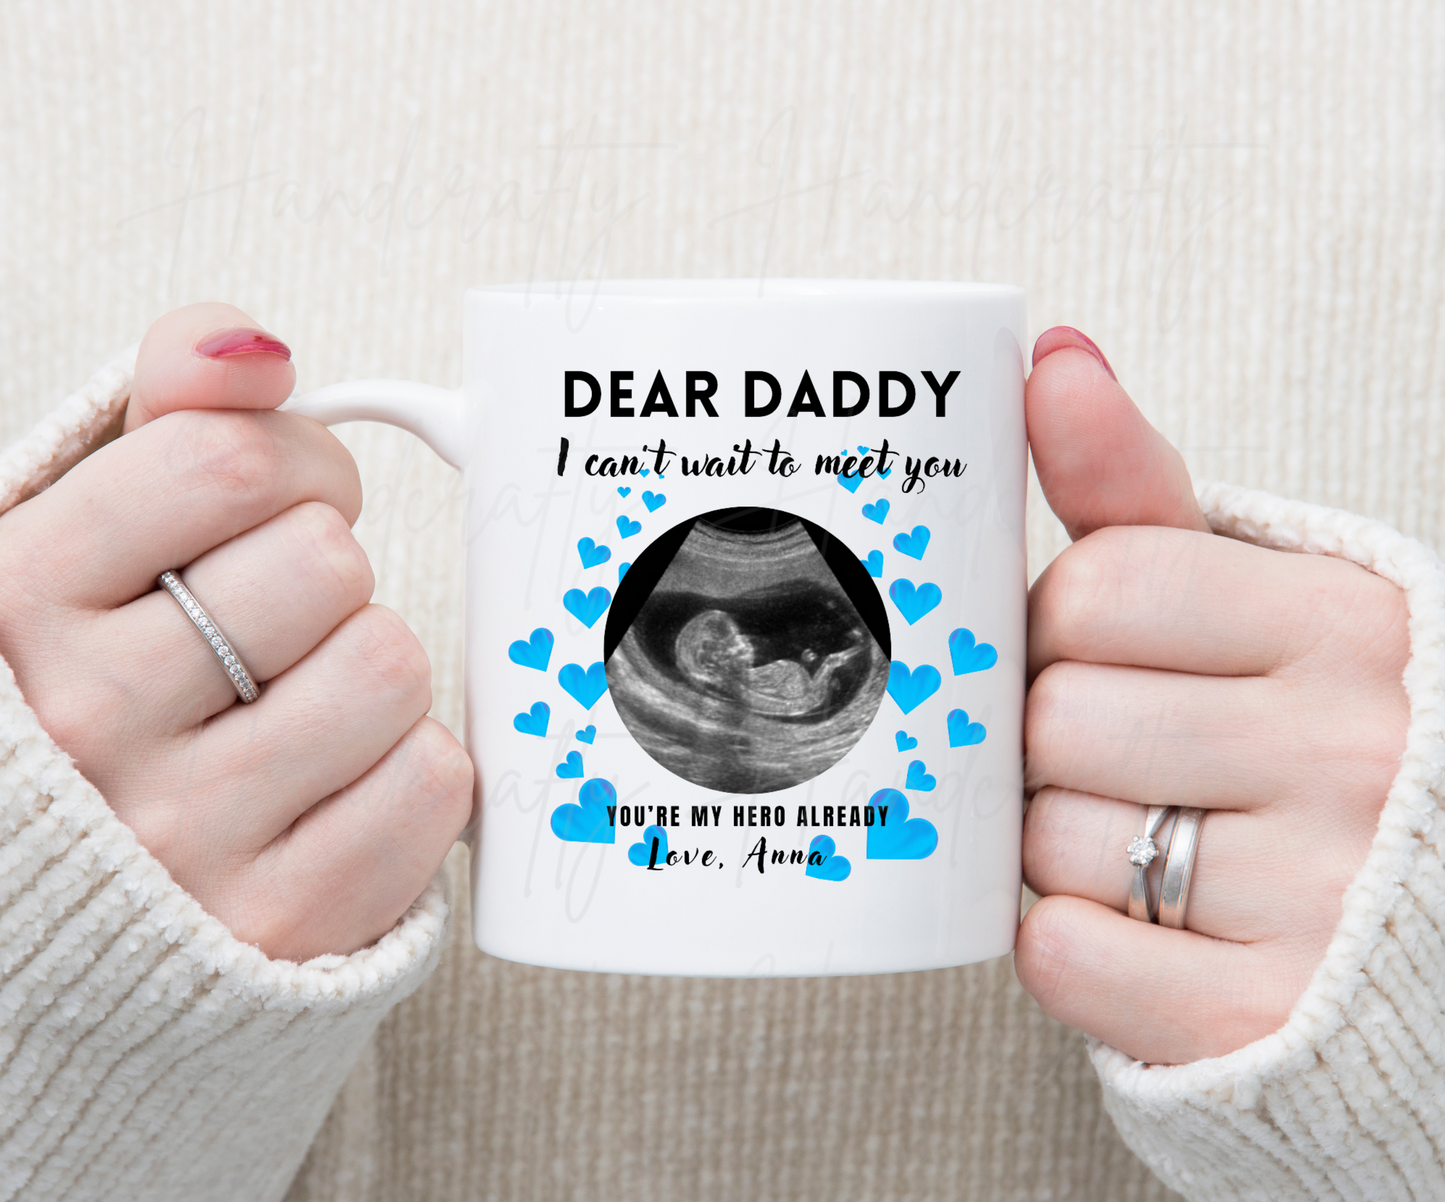 Ultrasound coffee mug, Personalized coffee mug, coffee mug for first time parents, ultrasound gift, ultrasound mug, first father's day gift. Ultrasound personalized coffee mug, ultrasound customized coffee mug, first fathers day gift, gift for father